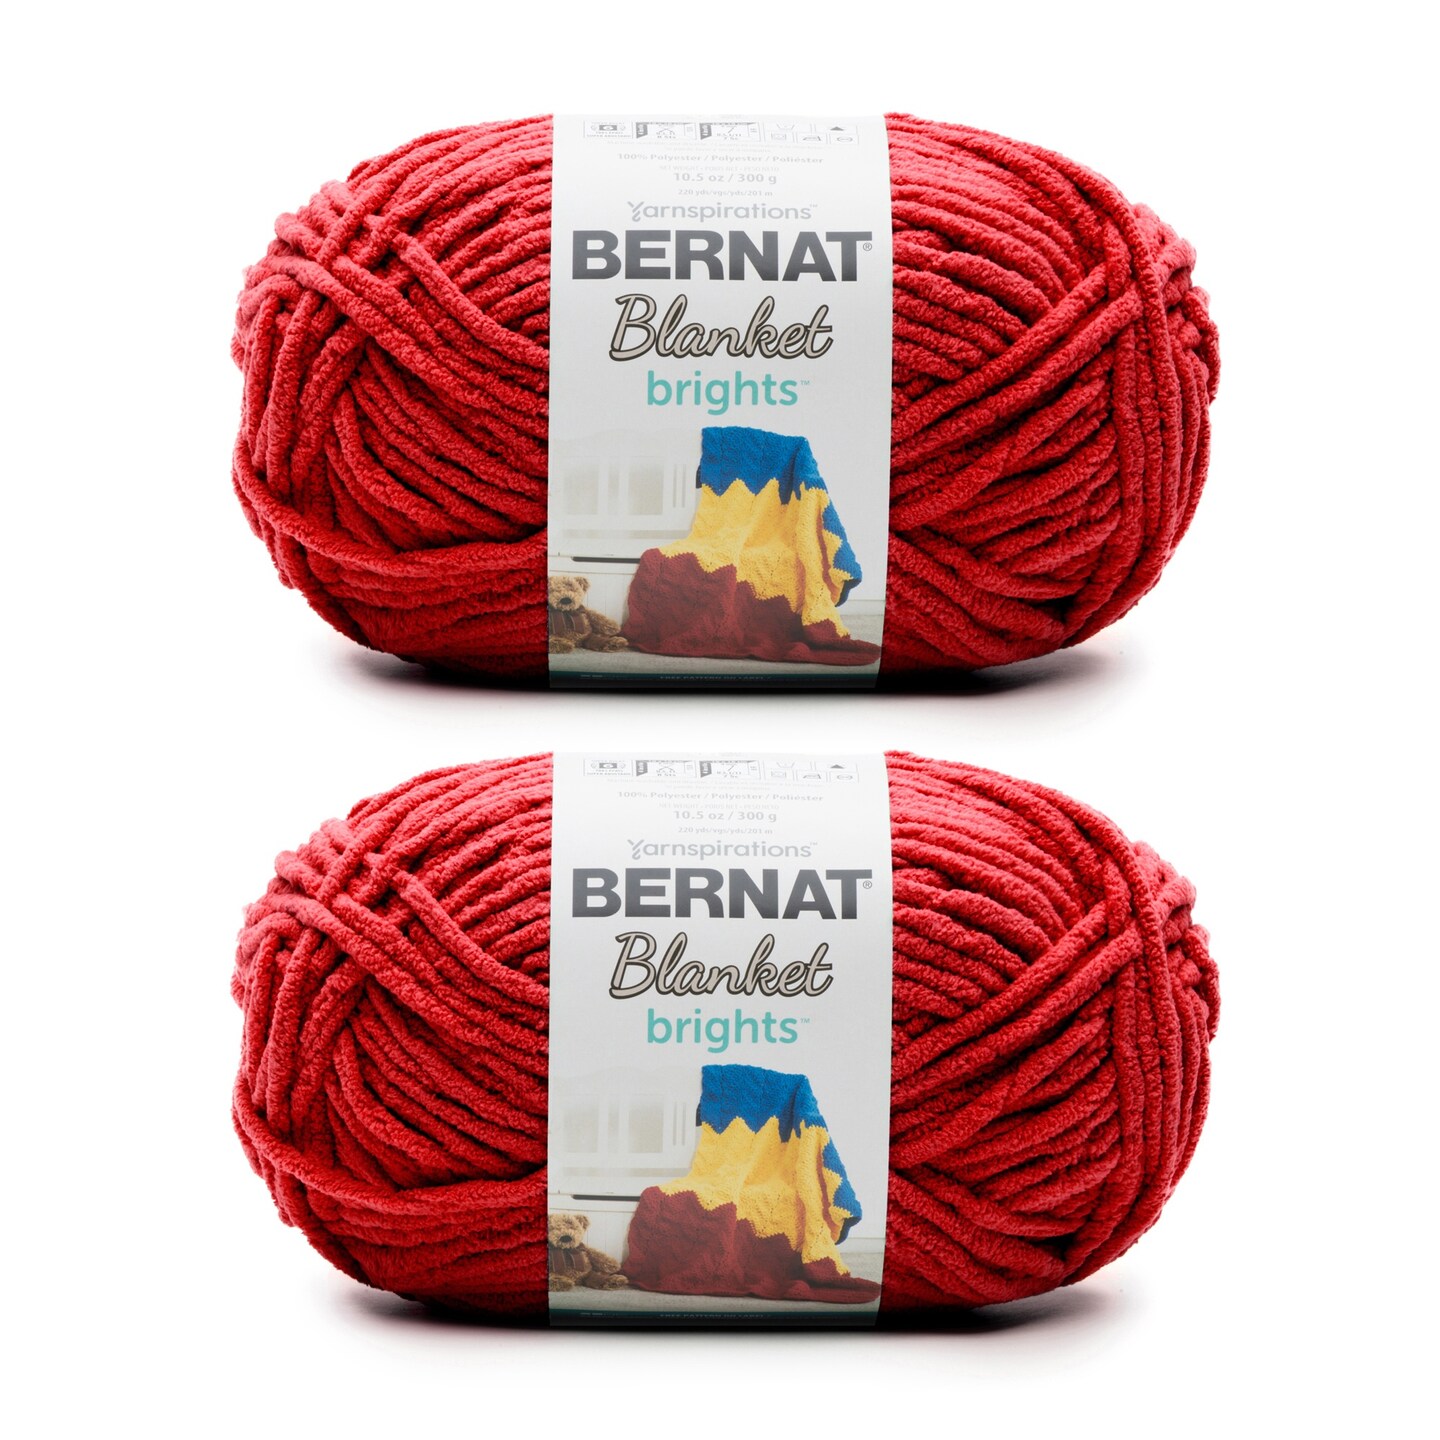 Bernat Blanket Brights Race Car Red Yarn - 2 Pack of 300g/10.5oz